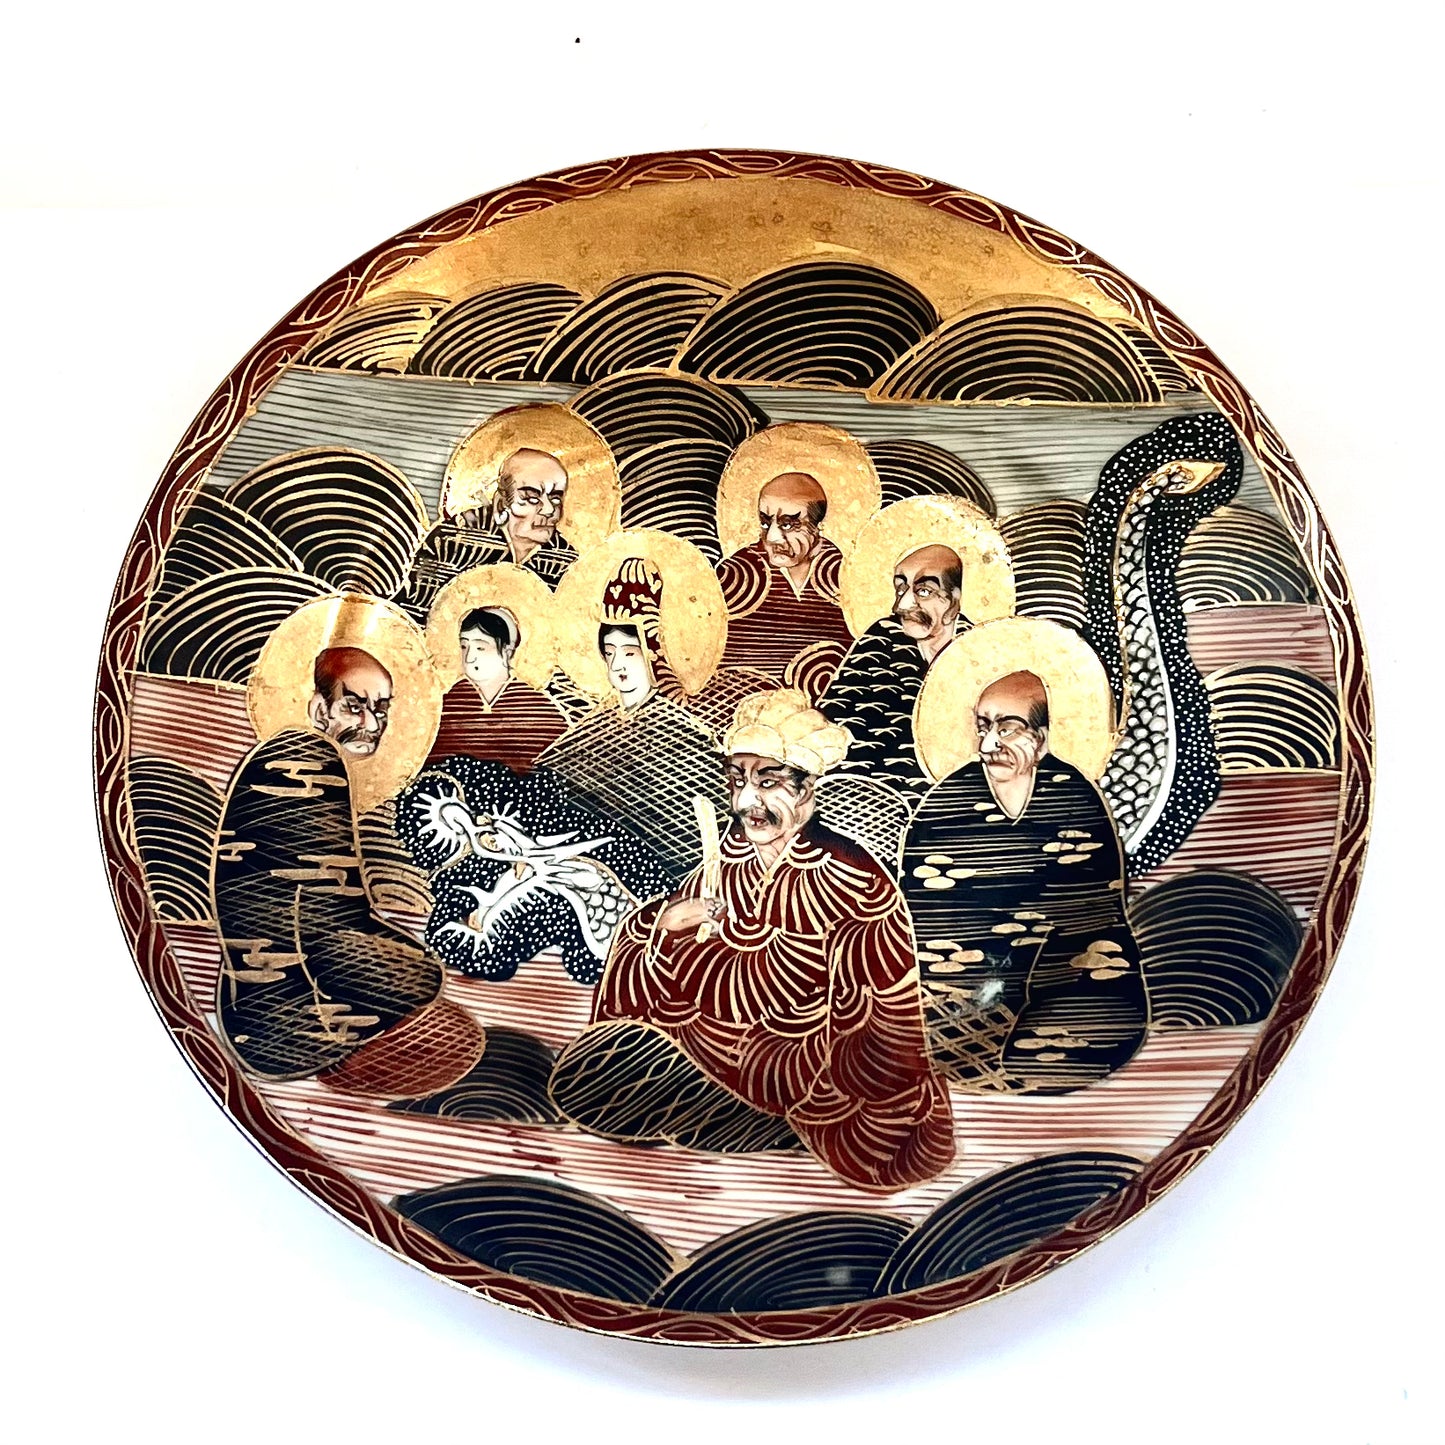 Mid 20th century Japanese Satsuma plate depicting Immortals